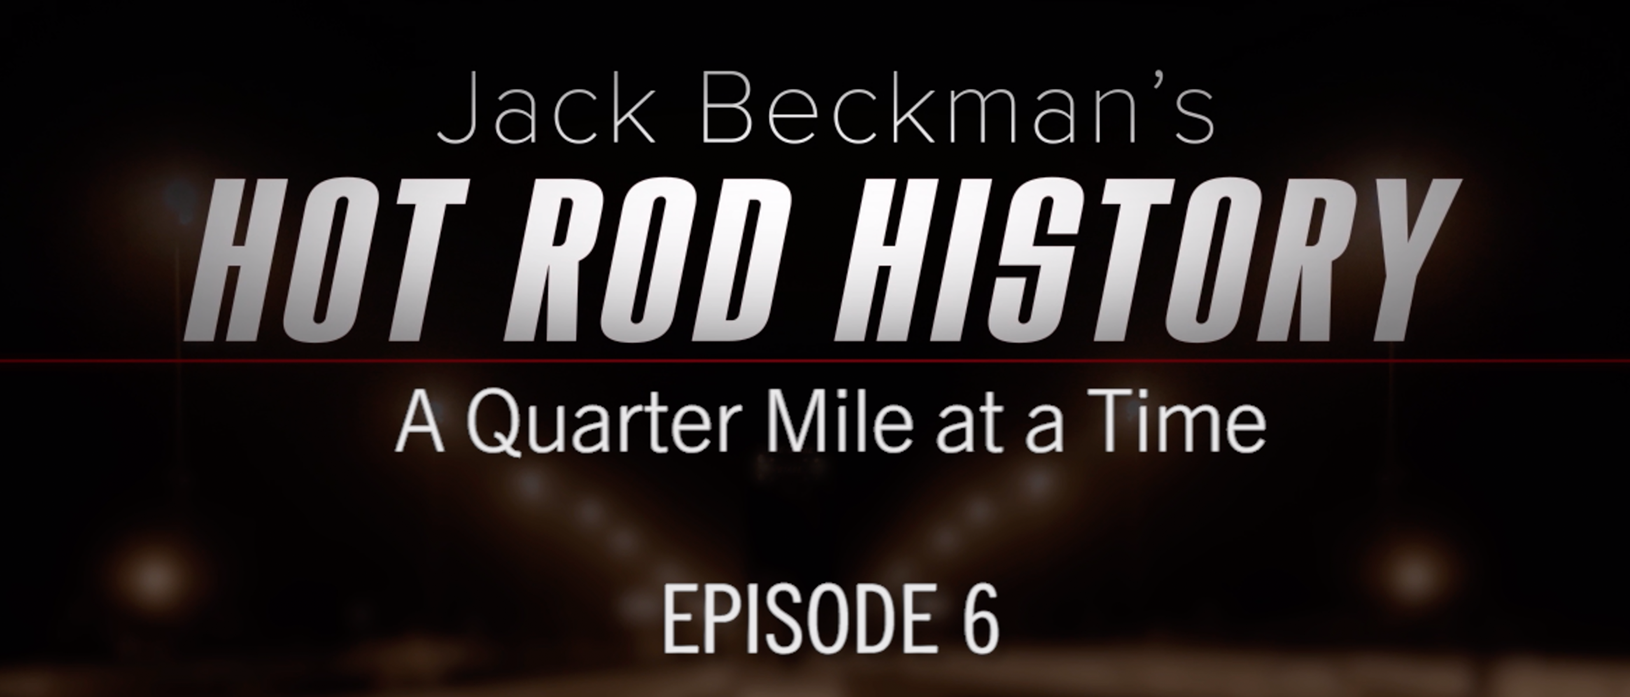 Jack Beckman’s Hot Rod History a Quarter-Mile at a Time – Episode 6